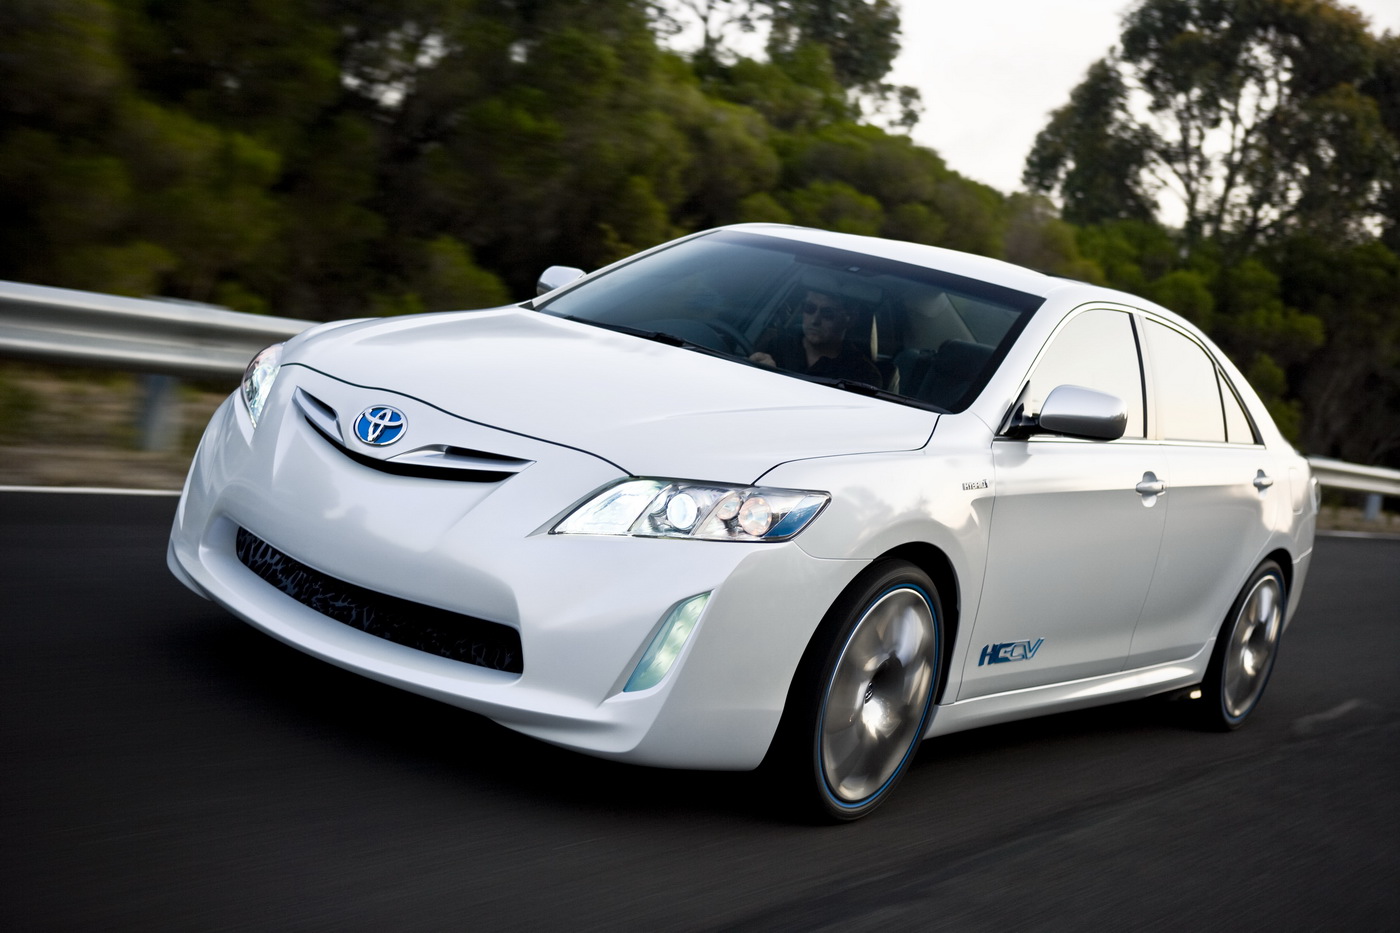 Toyota 86 hybrid is under development according to report